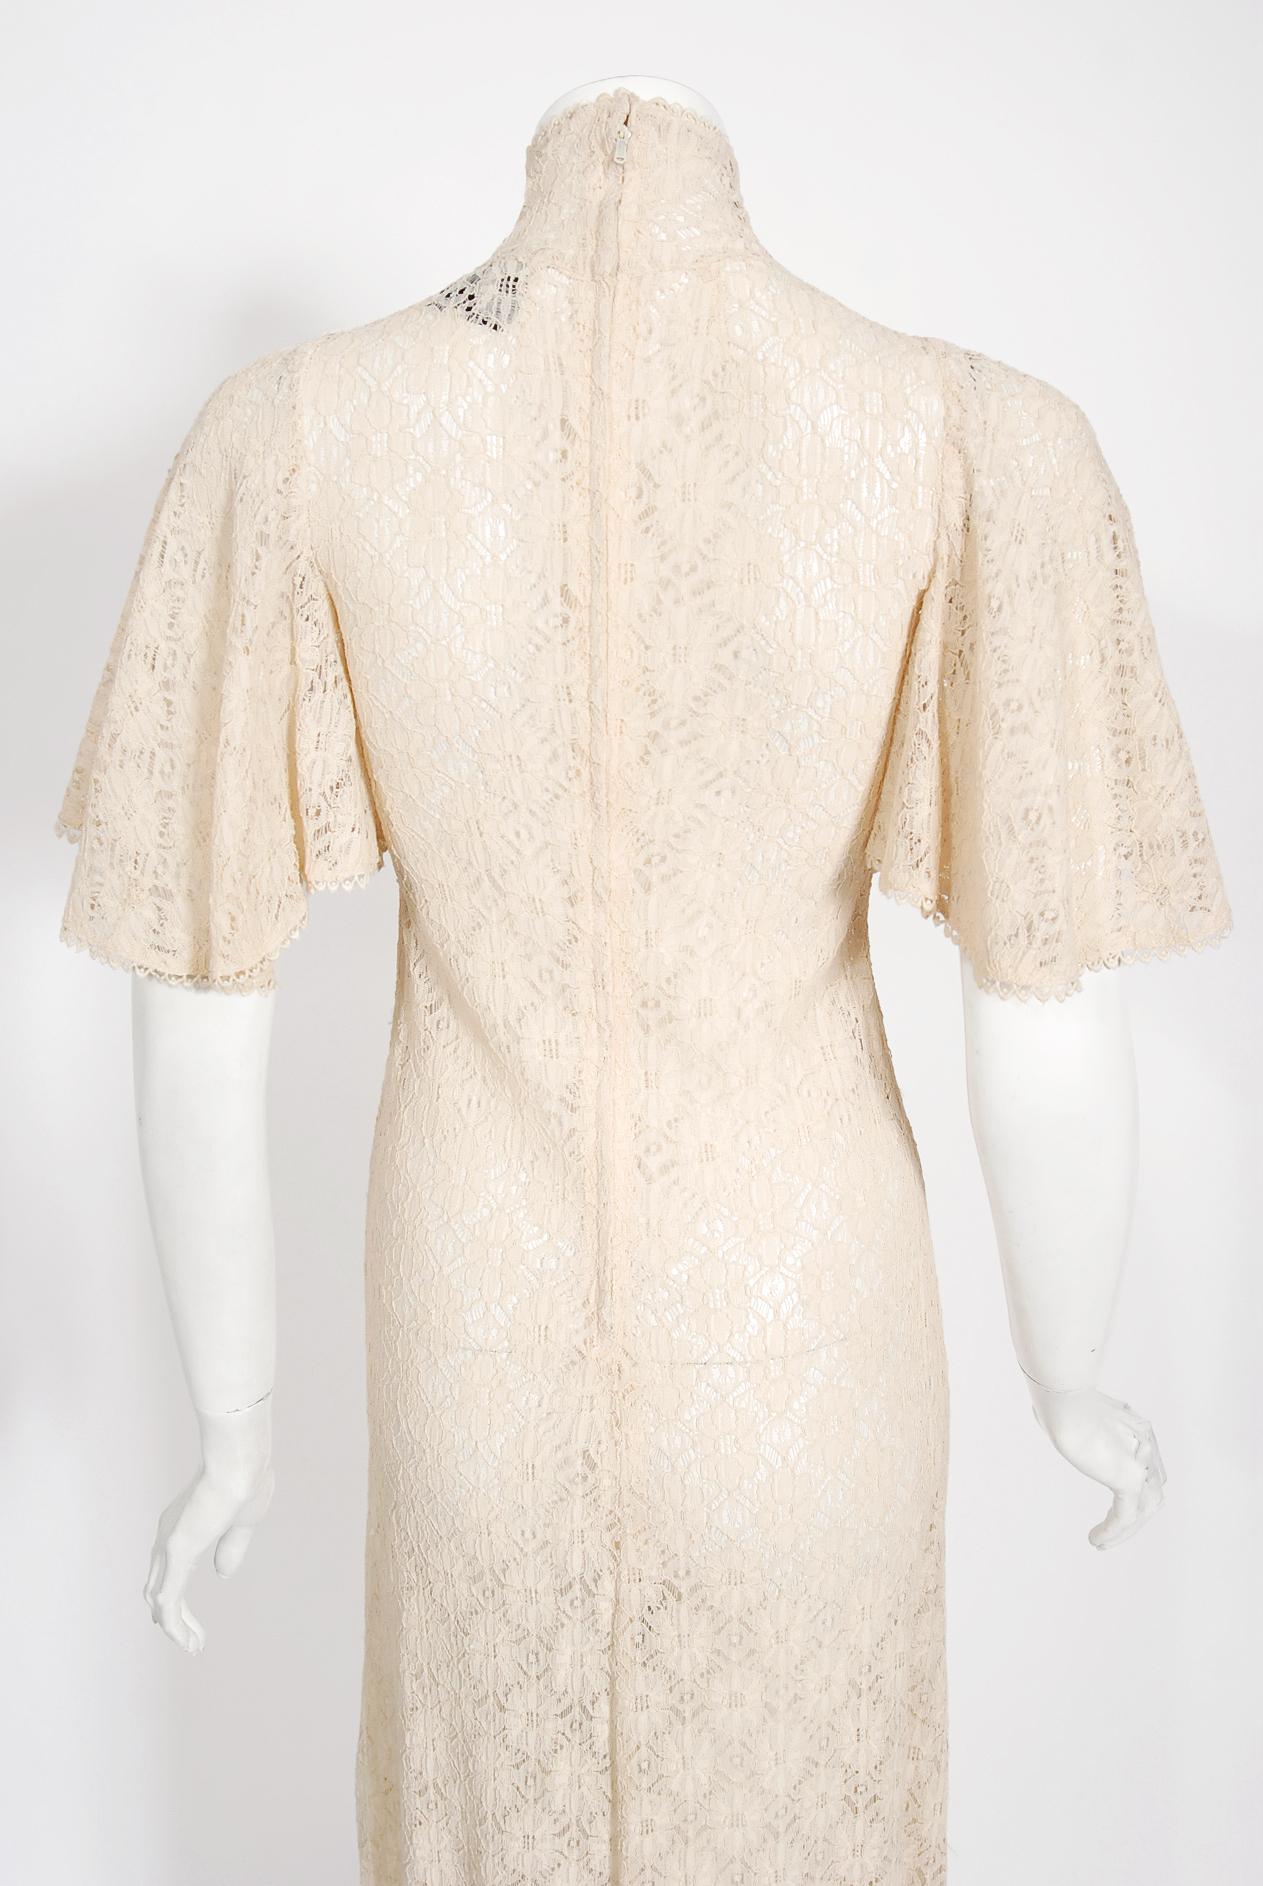 Vintage 1969 Biba Documented Cream Sheer Lace High-Neck Flutter Sleeve Tea Dress 5